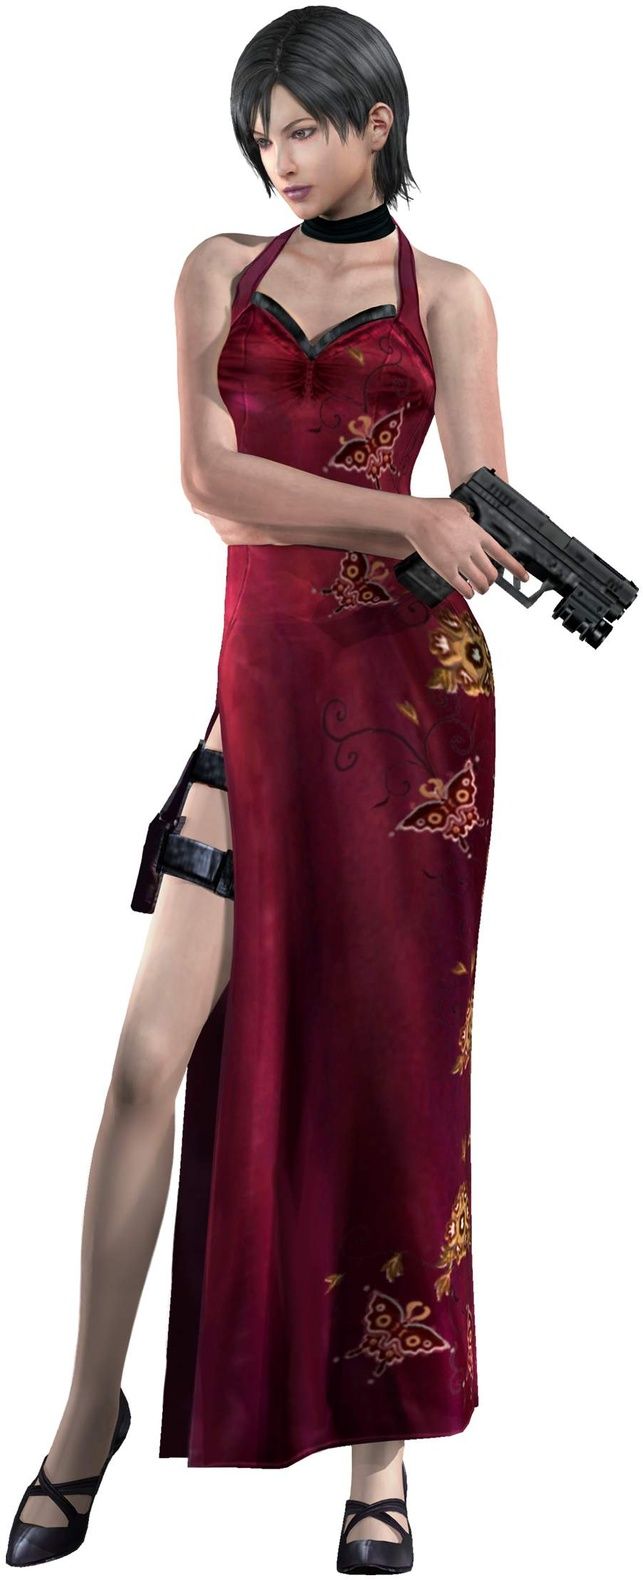 Video Game Characters Female. Resident evil girl, Ada resident evil, Ada wong